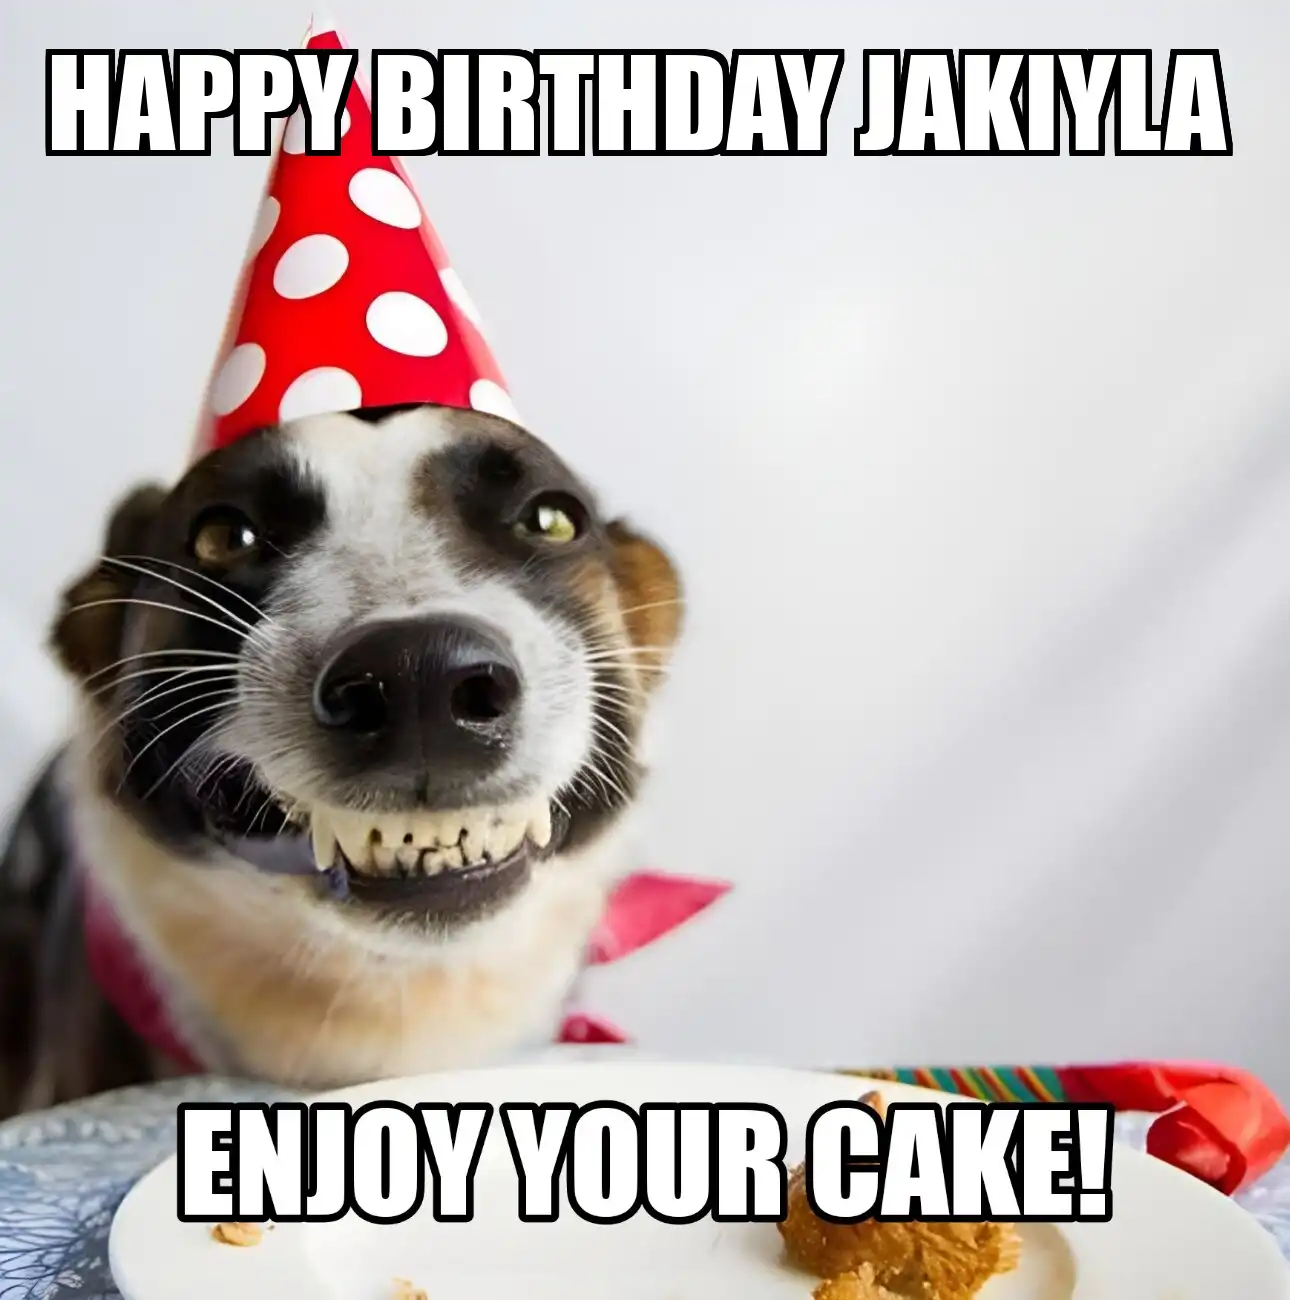 Happy Birthday Jakiyla Enjoy Your Cake Dog Meme